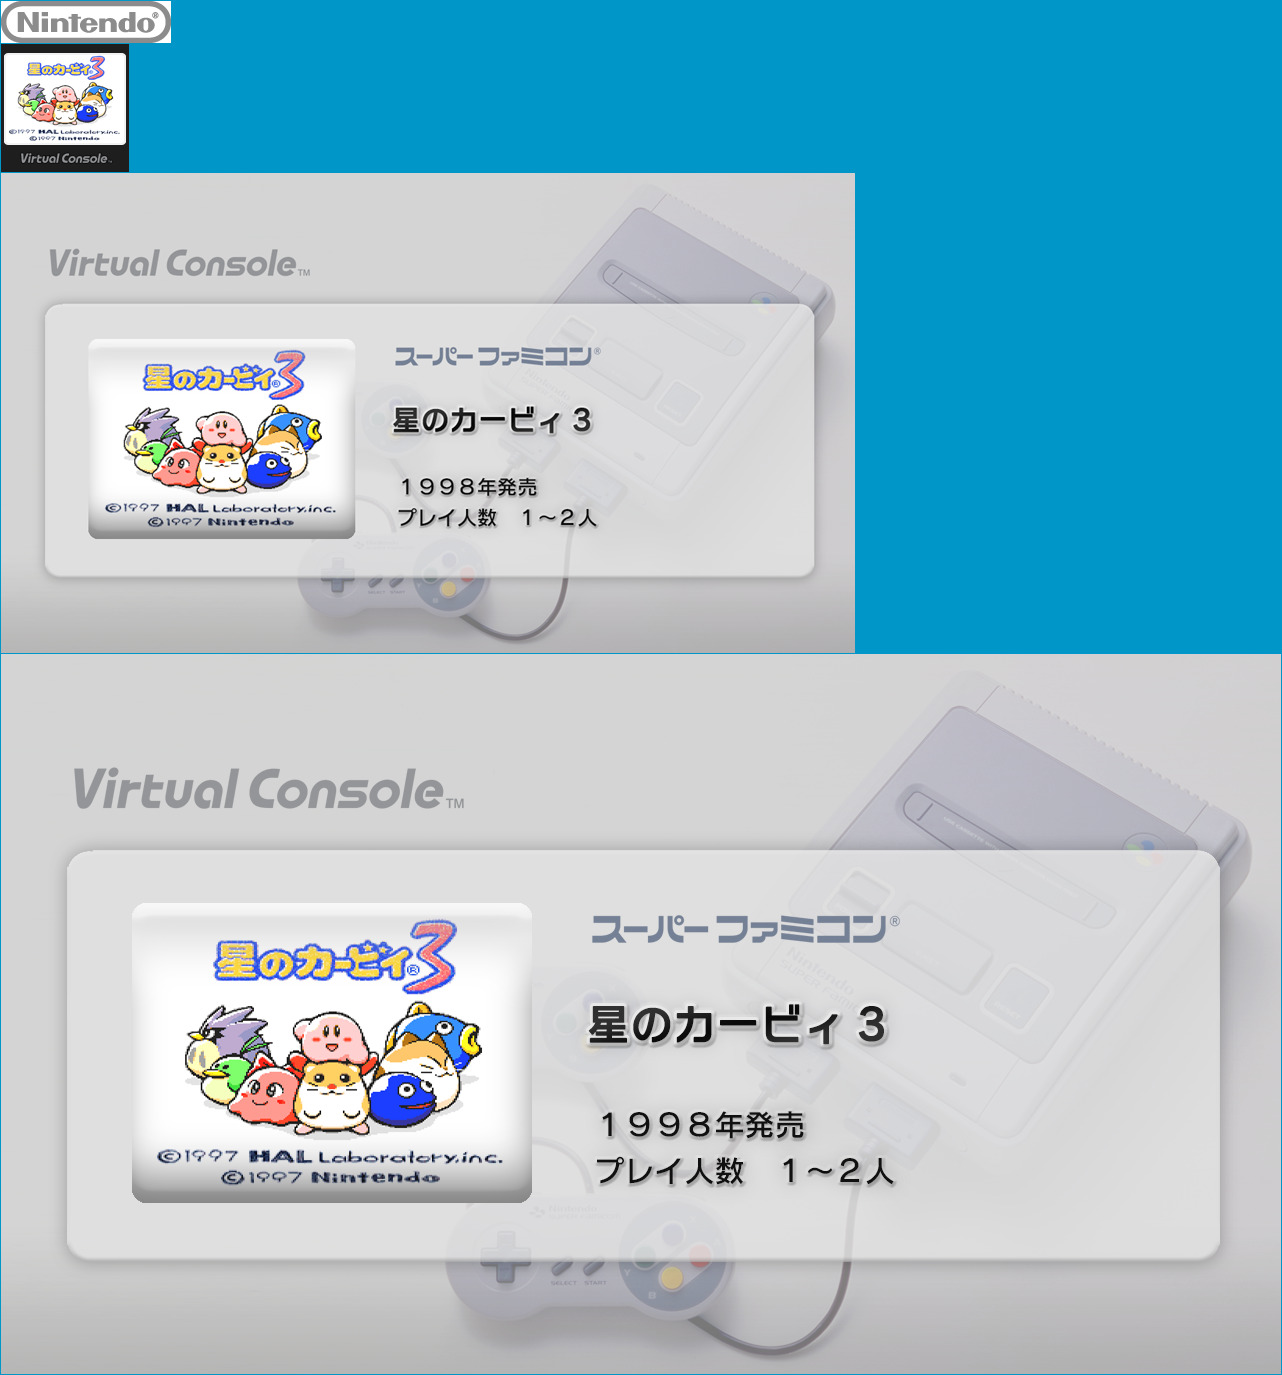 Virtual Console - Hoshi no Kirby 3